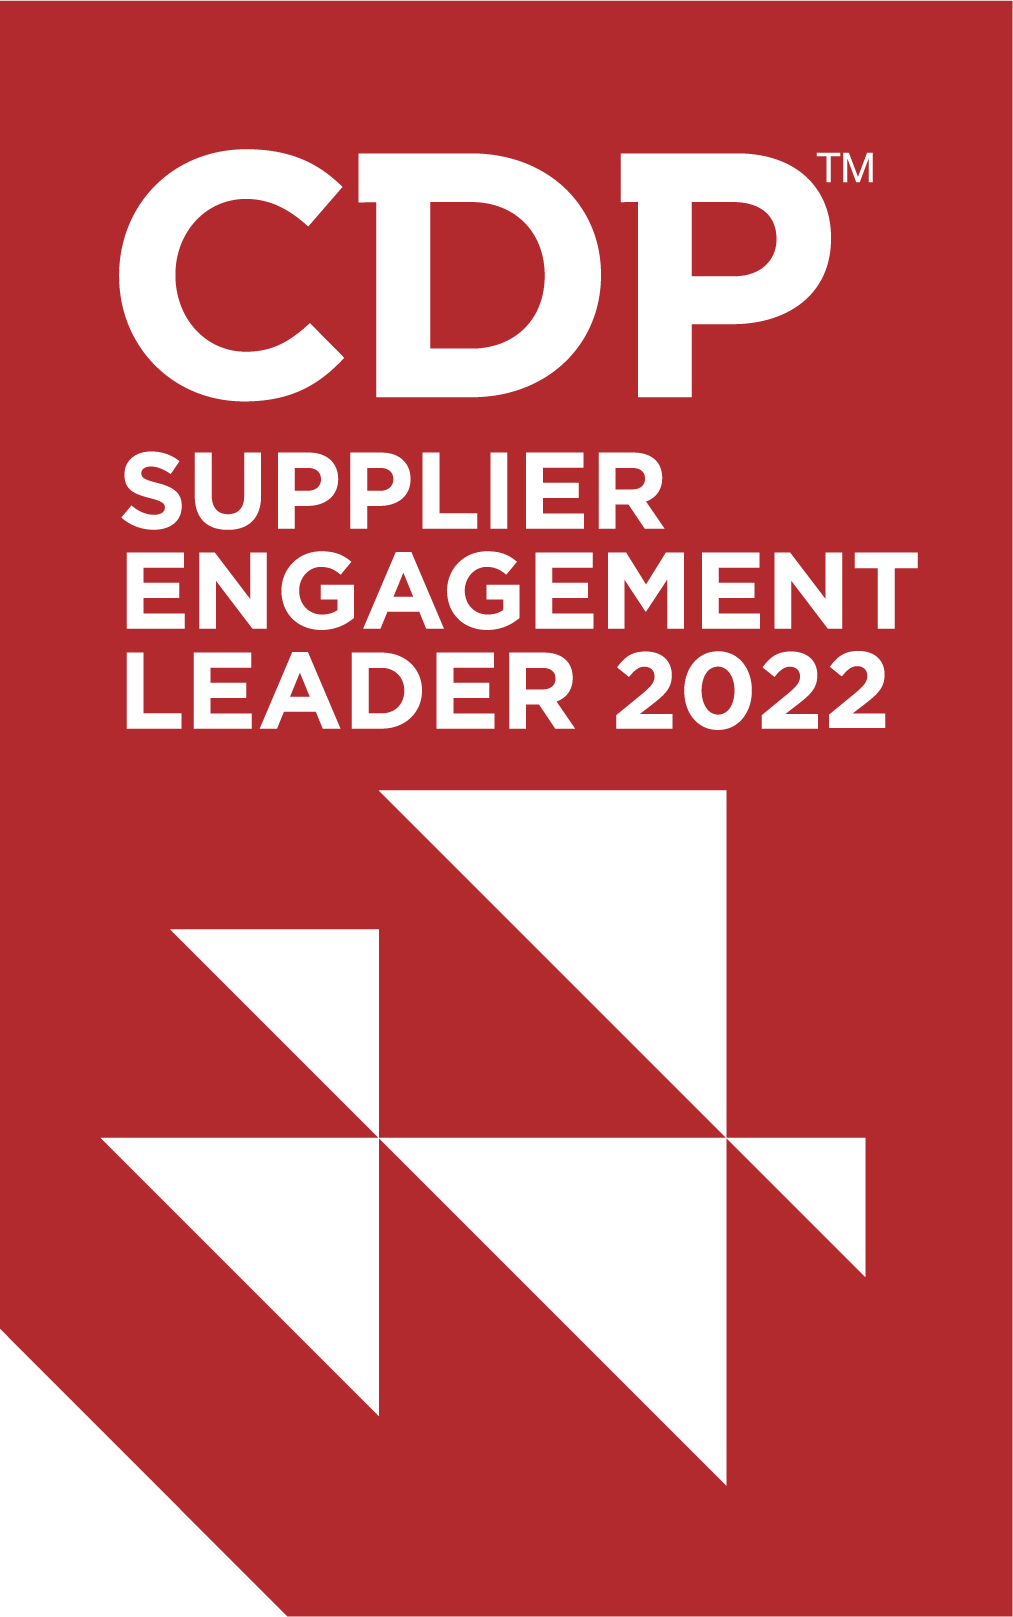 CDP SUPPLIER ENGAGEMENT LEADER 2022 ロゴ